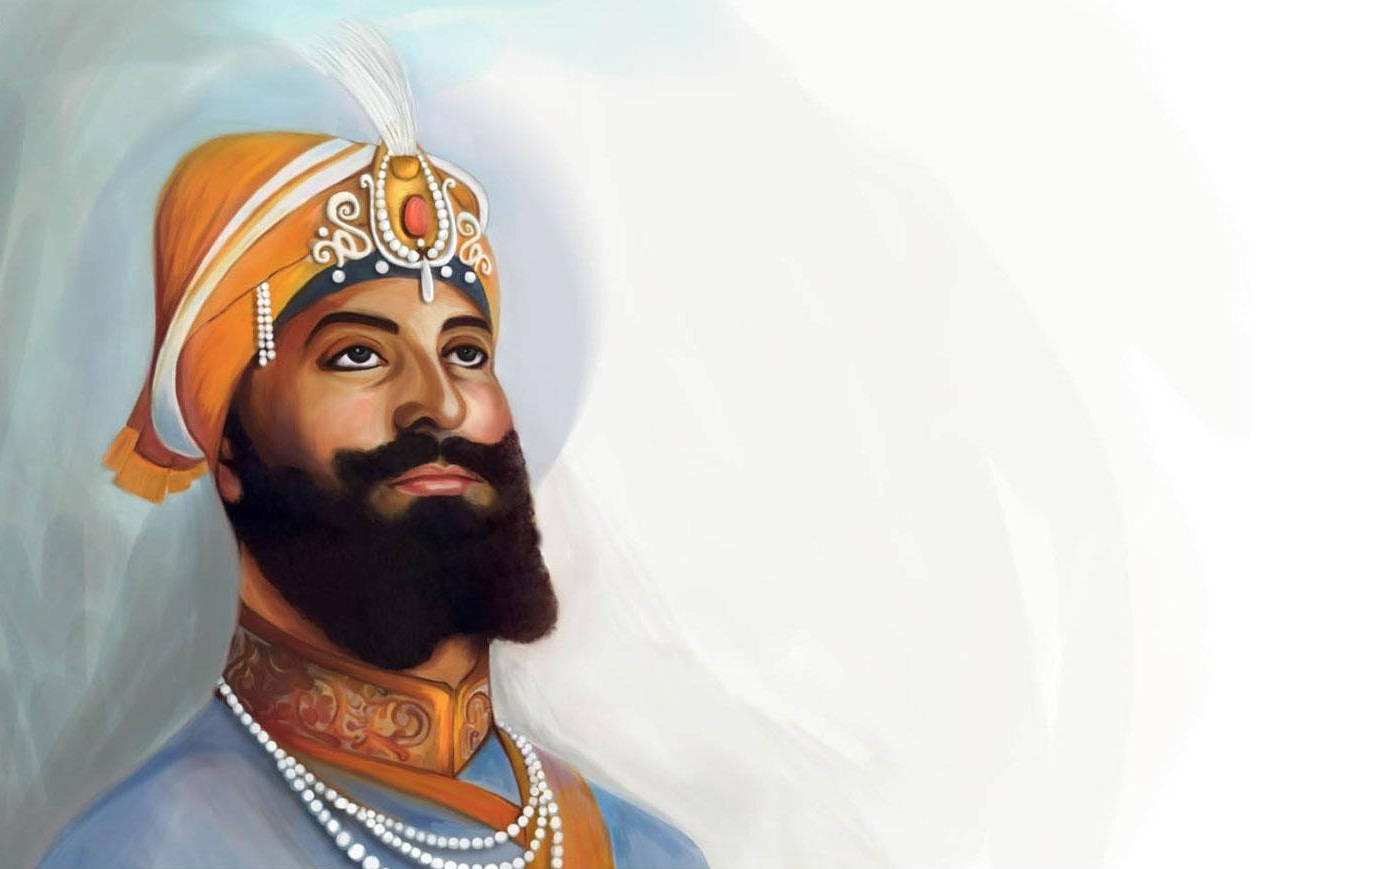 Guru Gobind Singh Ji Confident Portrait Wallpaper